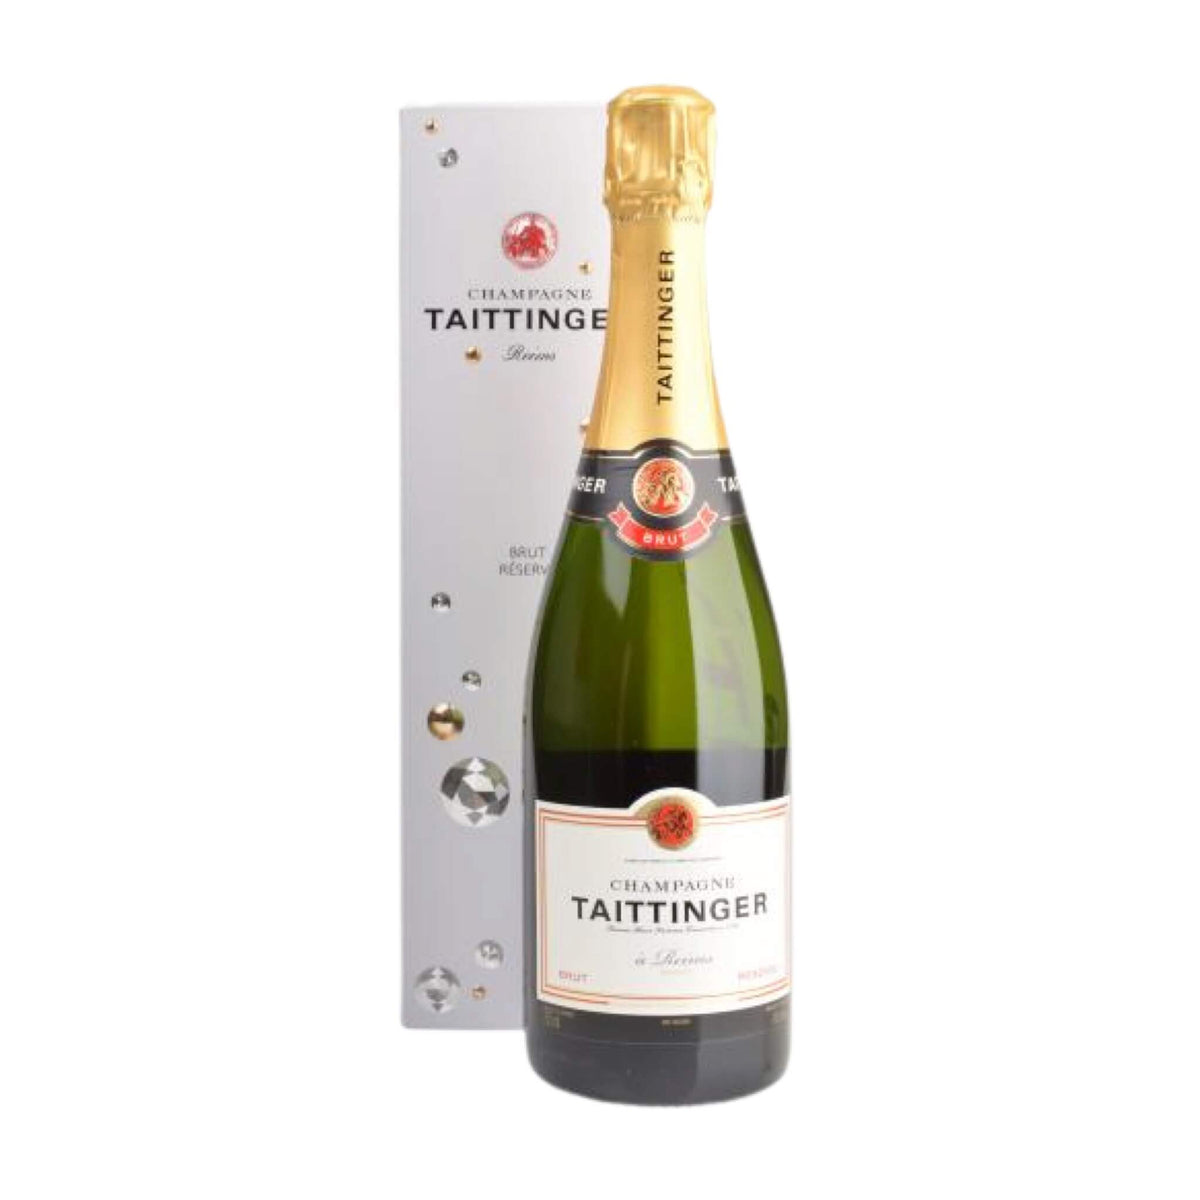 Champagne Taittinger-Champagner-Chardonnay, Pinot Noir-Taittinger Brut Reserve Champagne-WINECOM